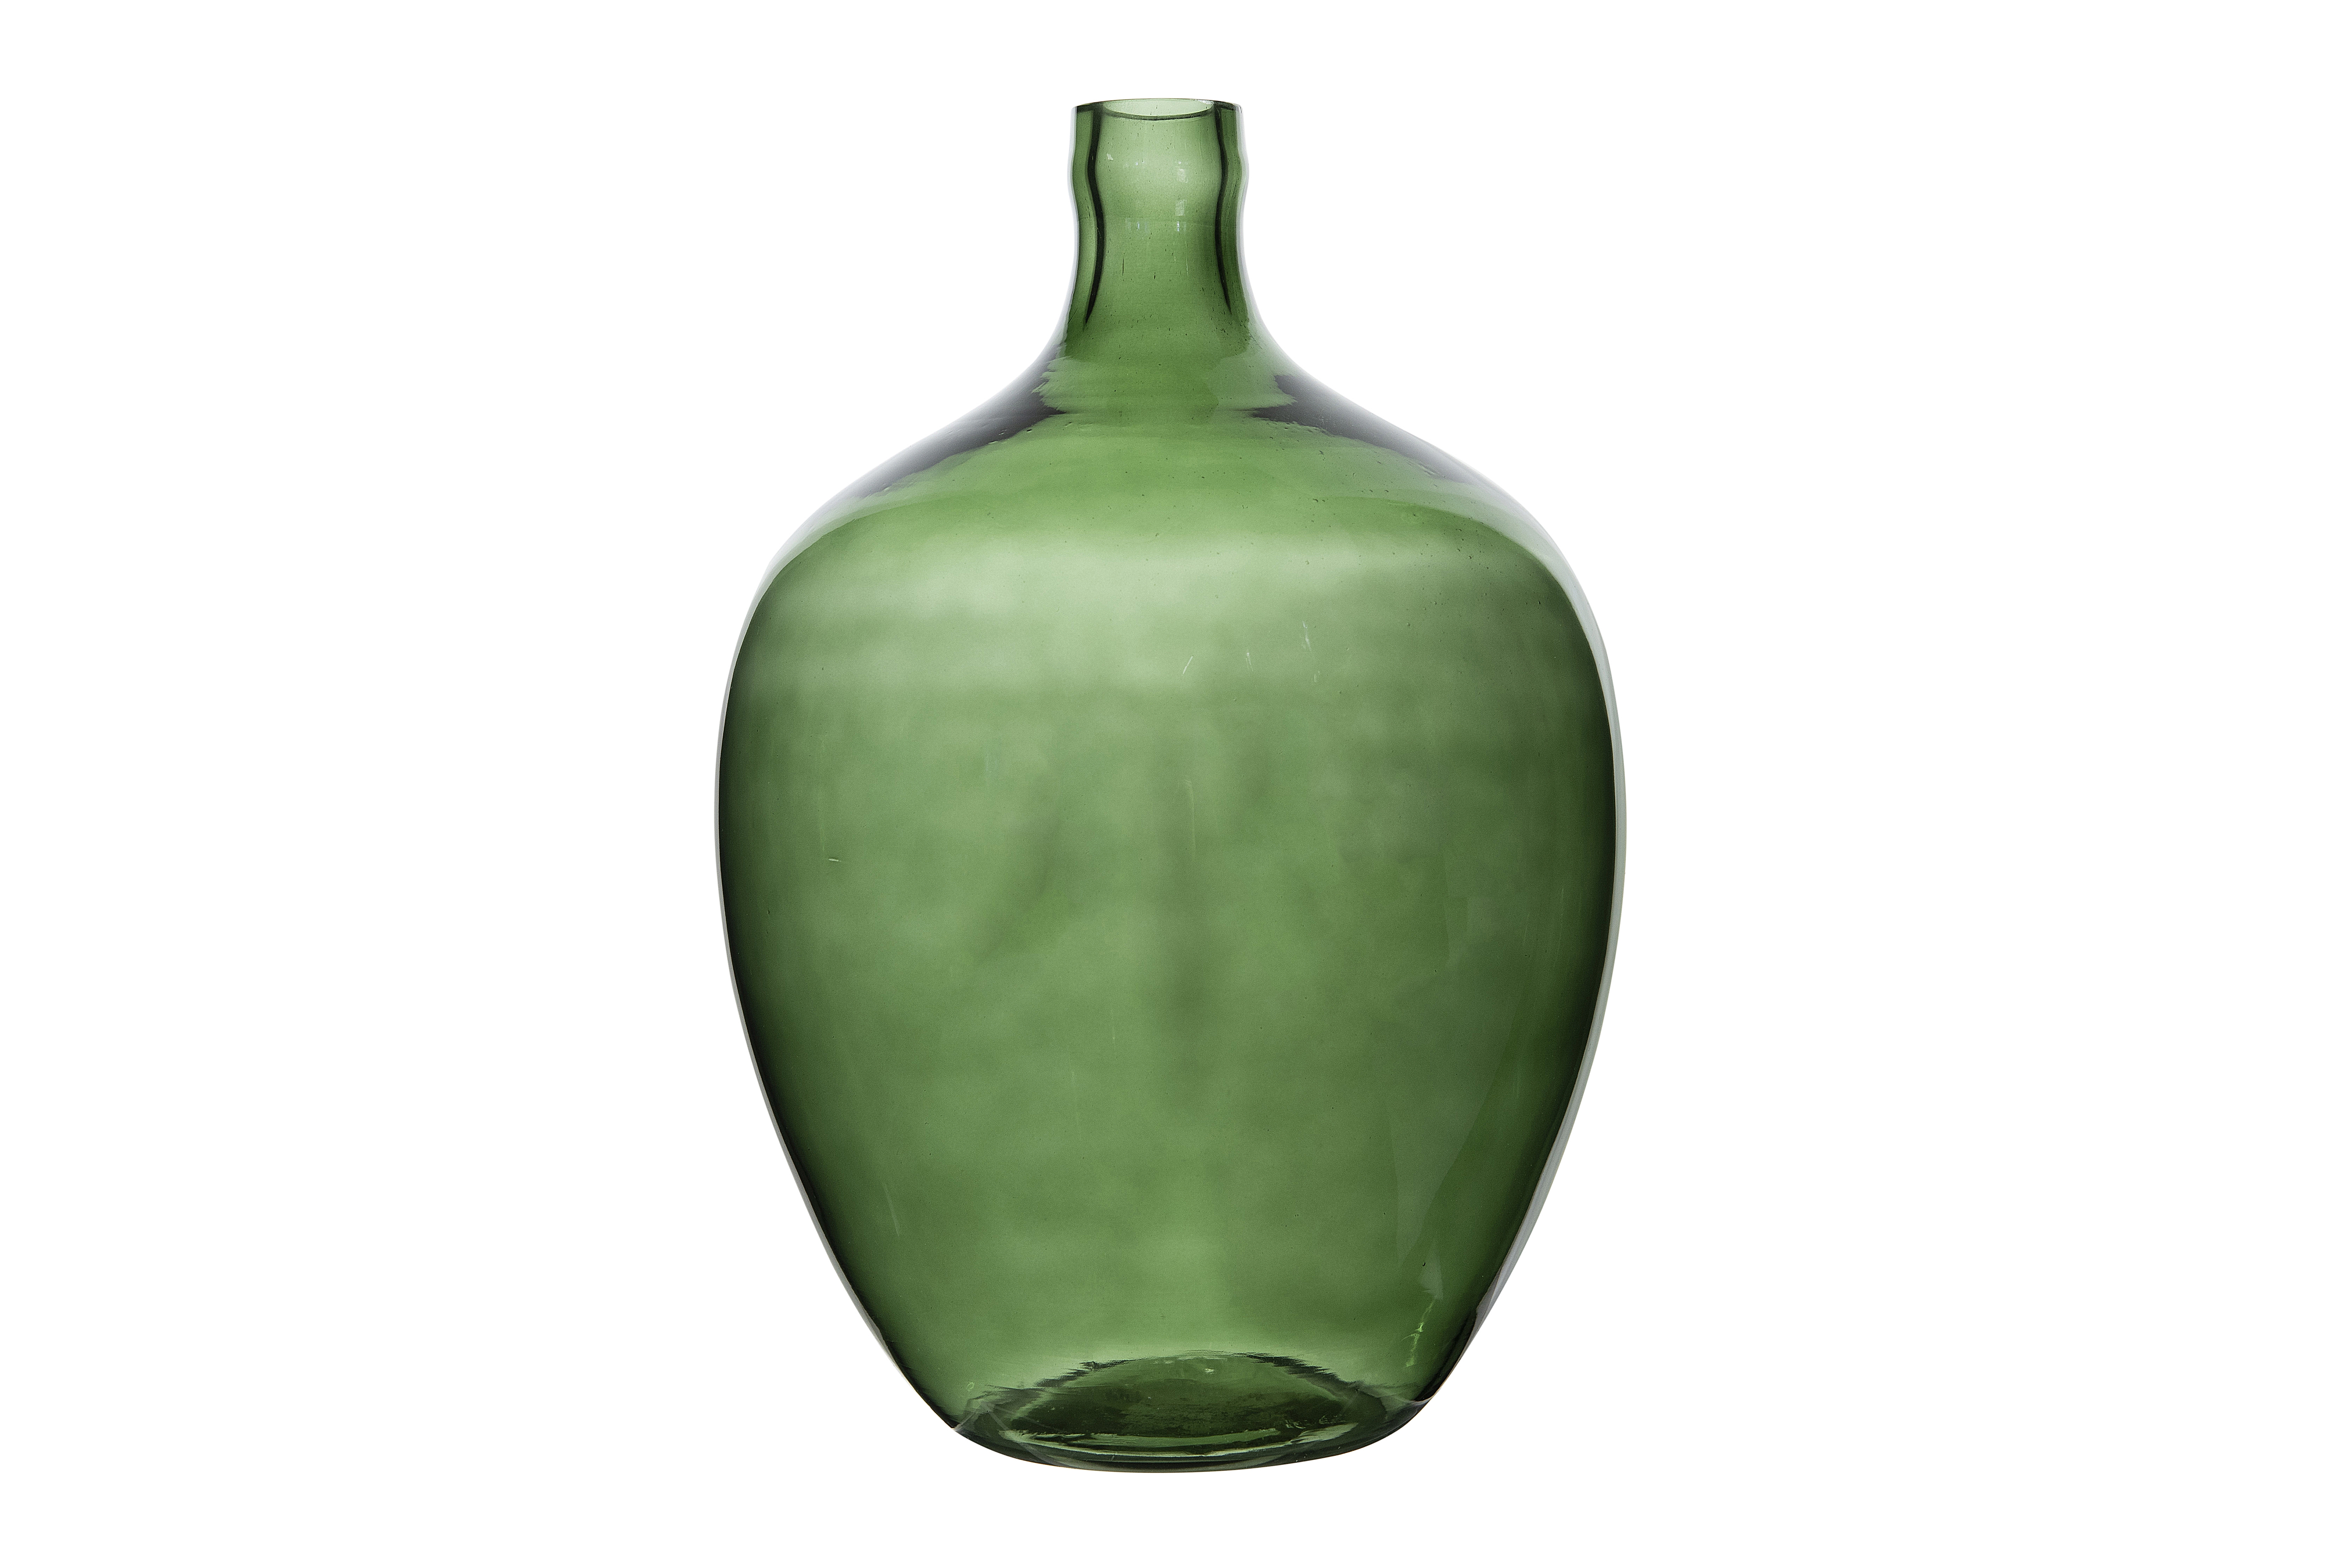 Vintage Reproduction Transparent Green Glass Bottle - Nomad Home